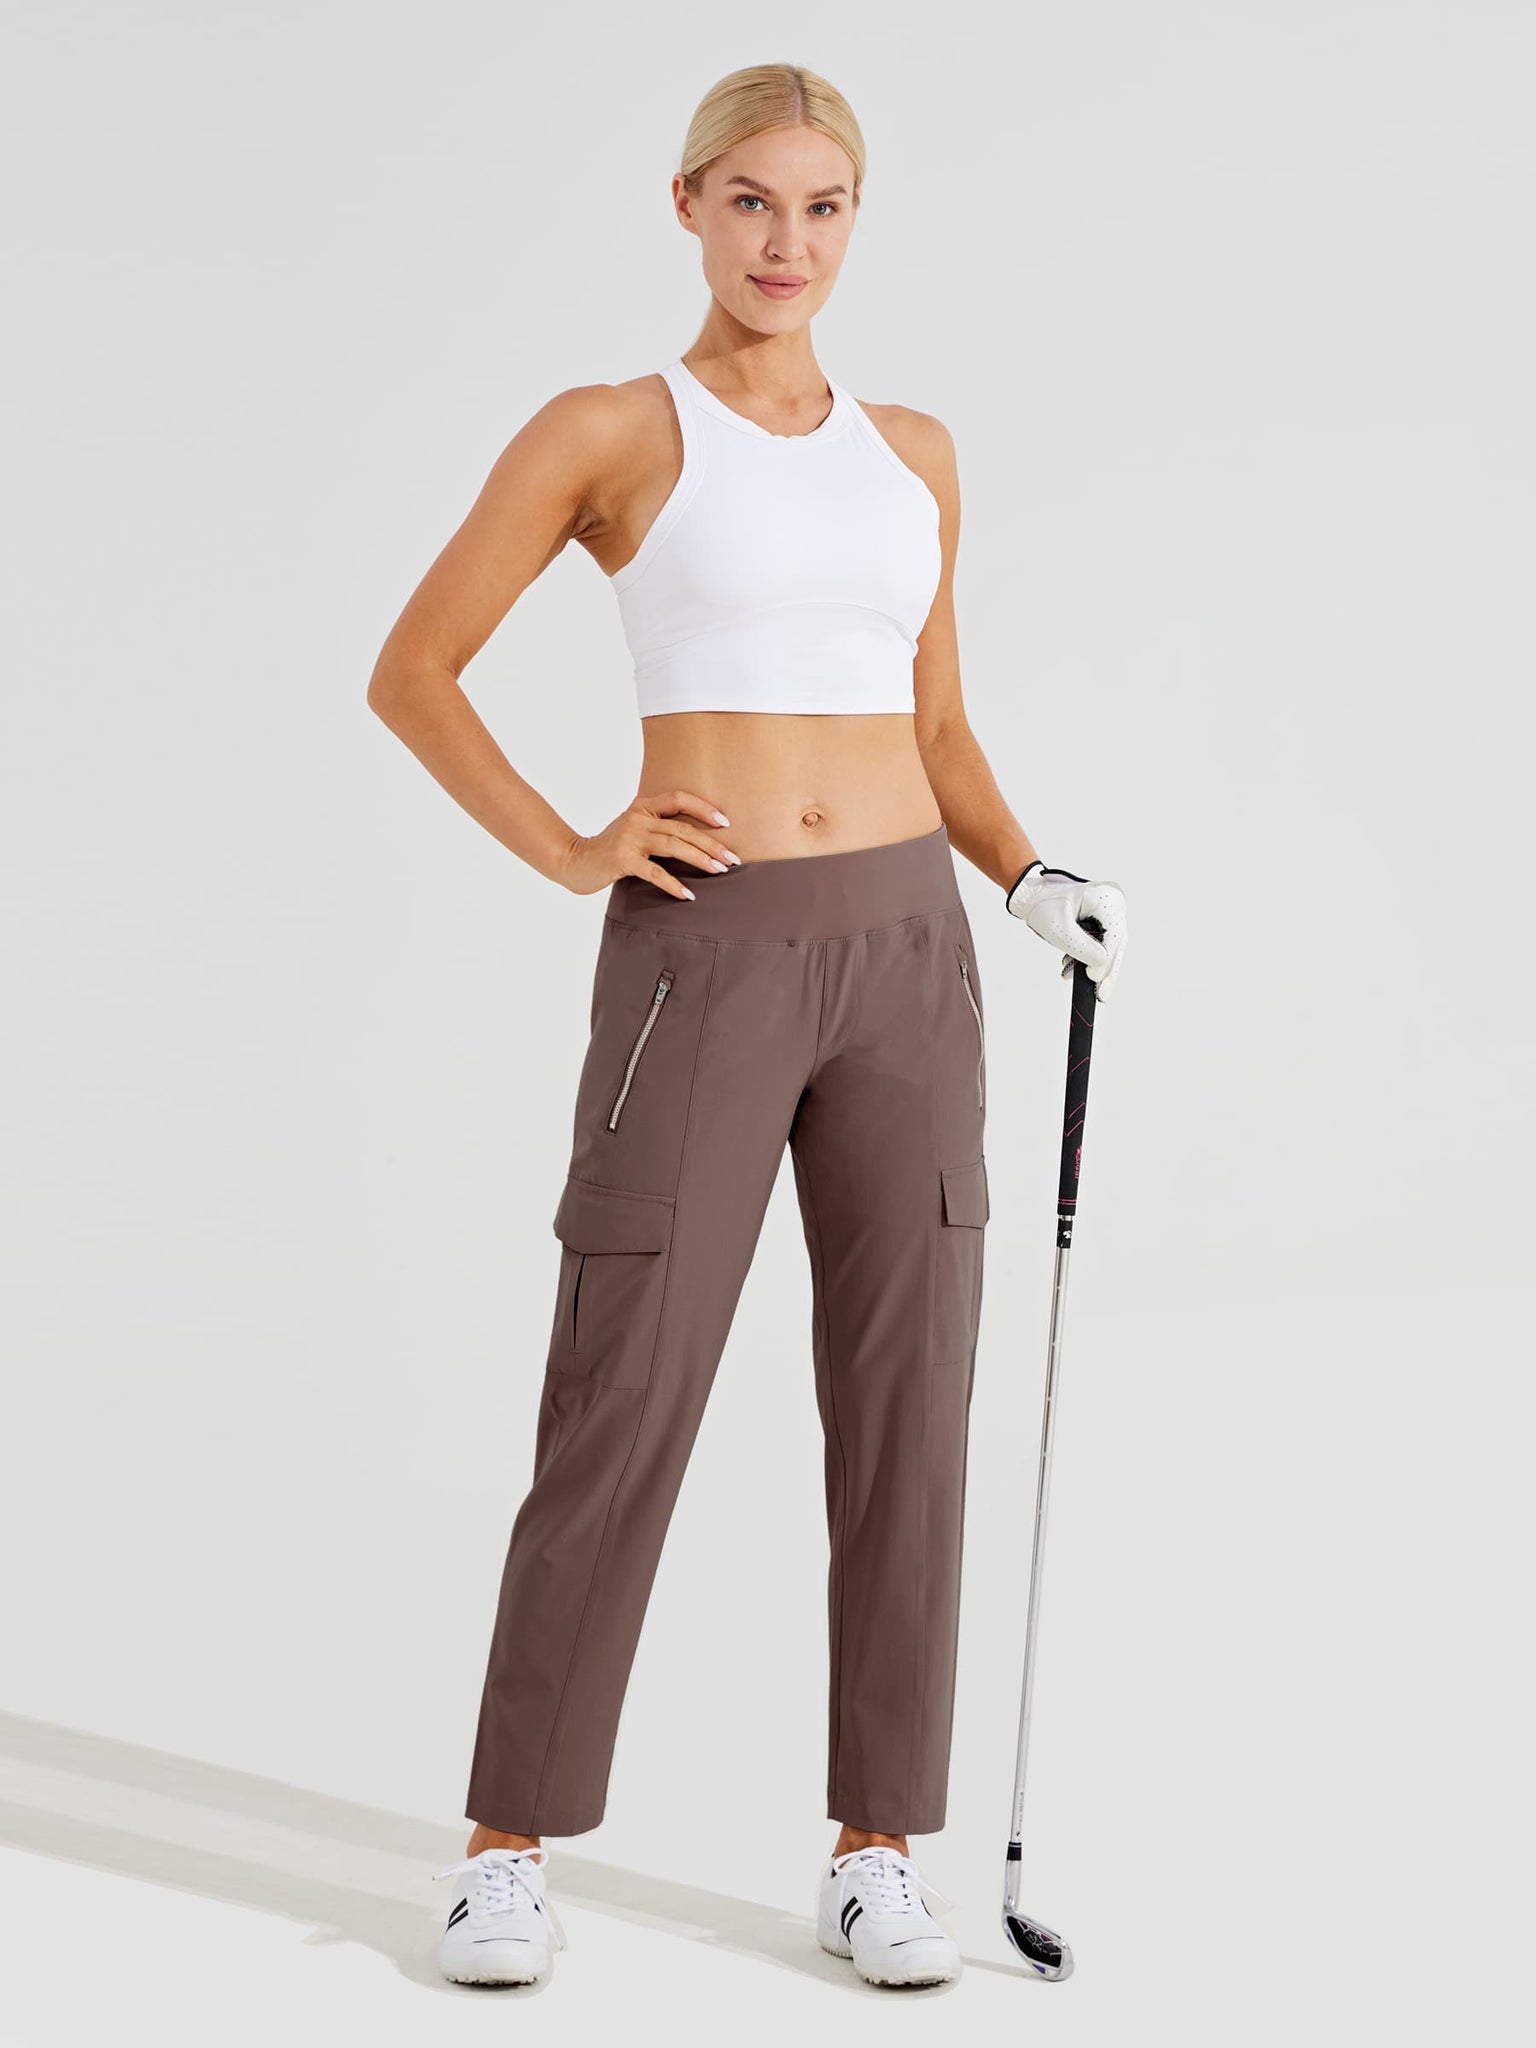 Willit Women's Yoga Dress Pants Bootcut Work Slacks Pants Stretch Office  Casual Pants Petite/Regular 4 Pockets 29/31/33, Burgundy, XL price in  Saudi Arabia,  Saudi Arabia